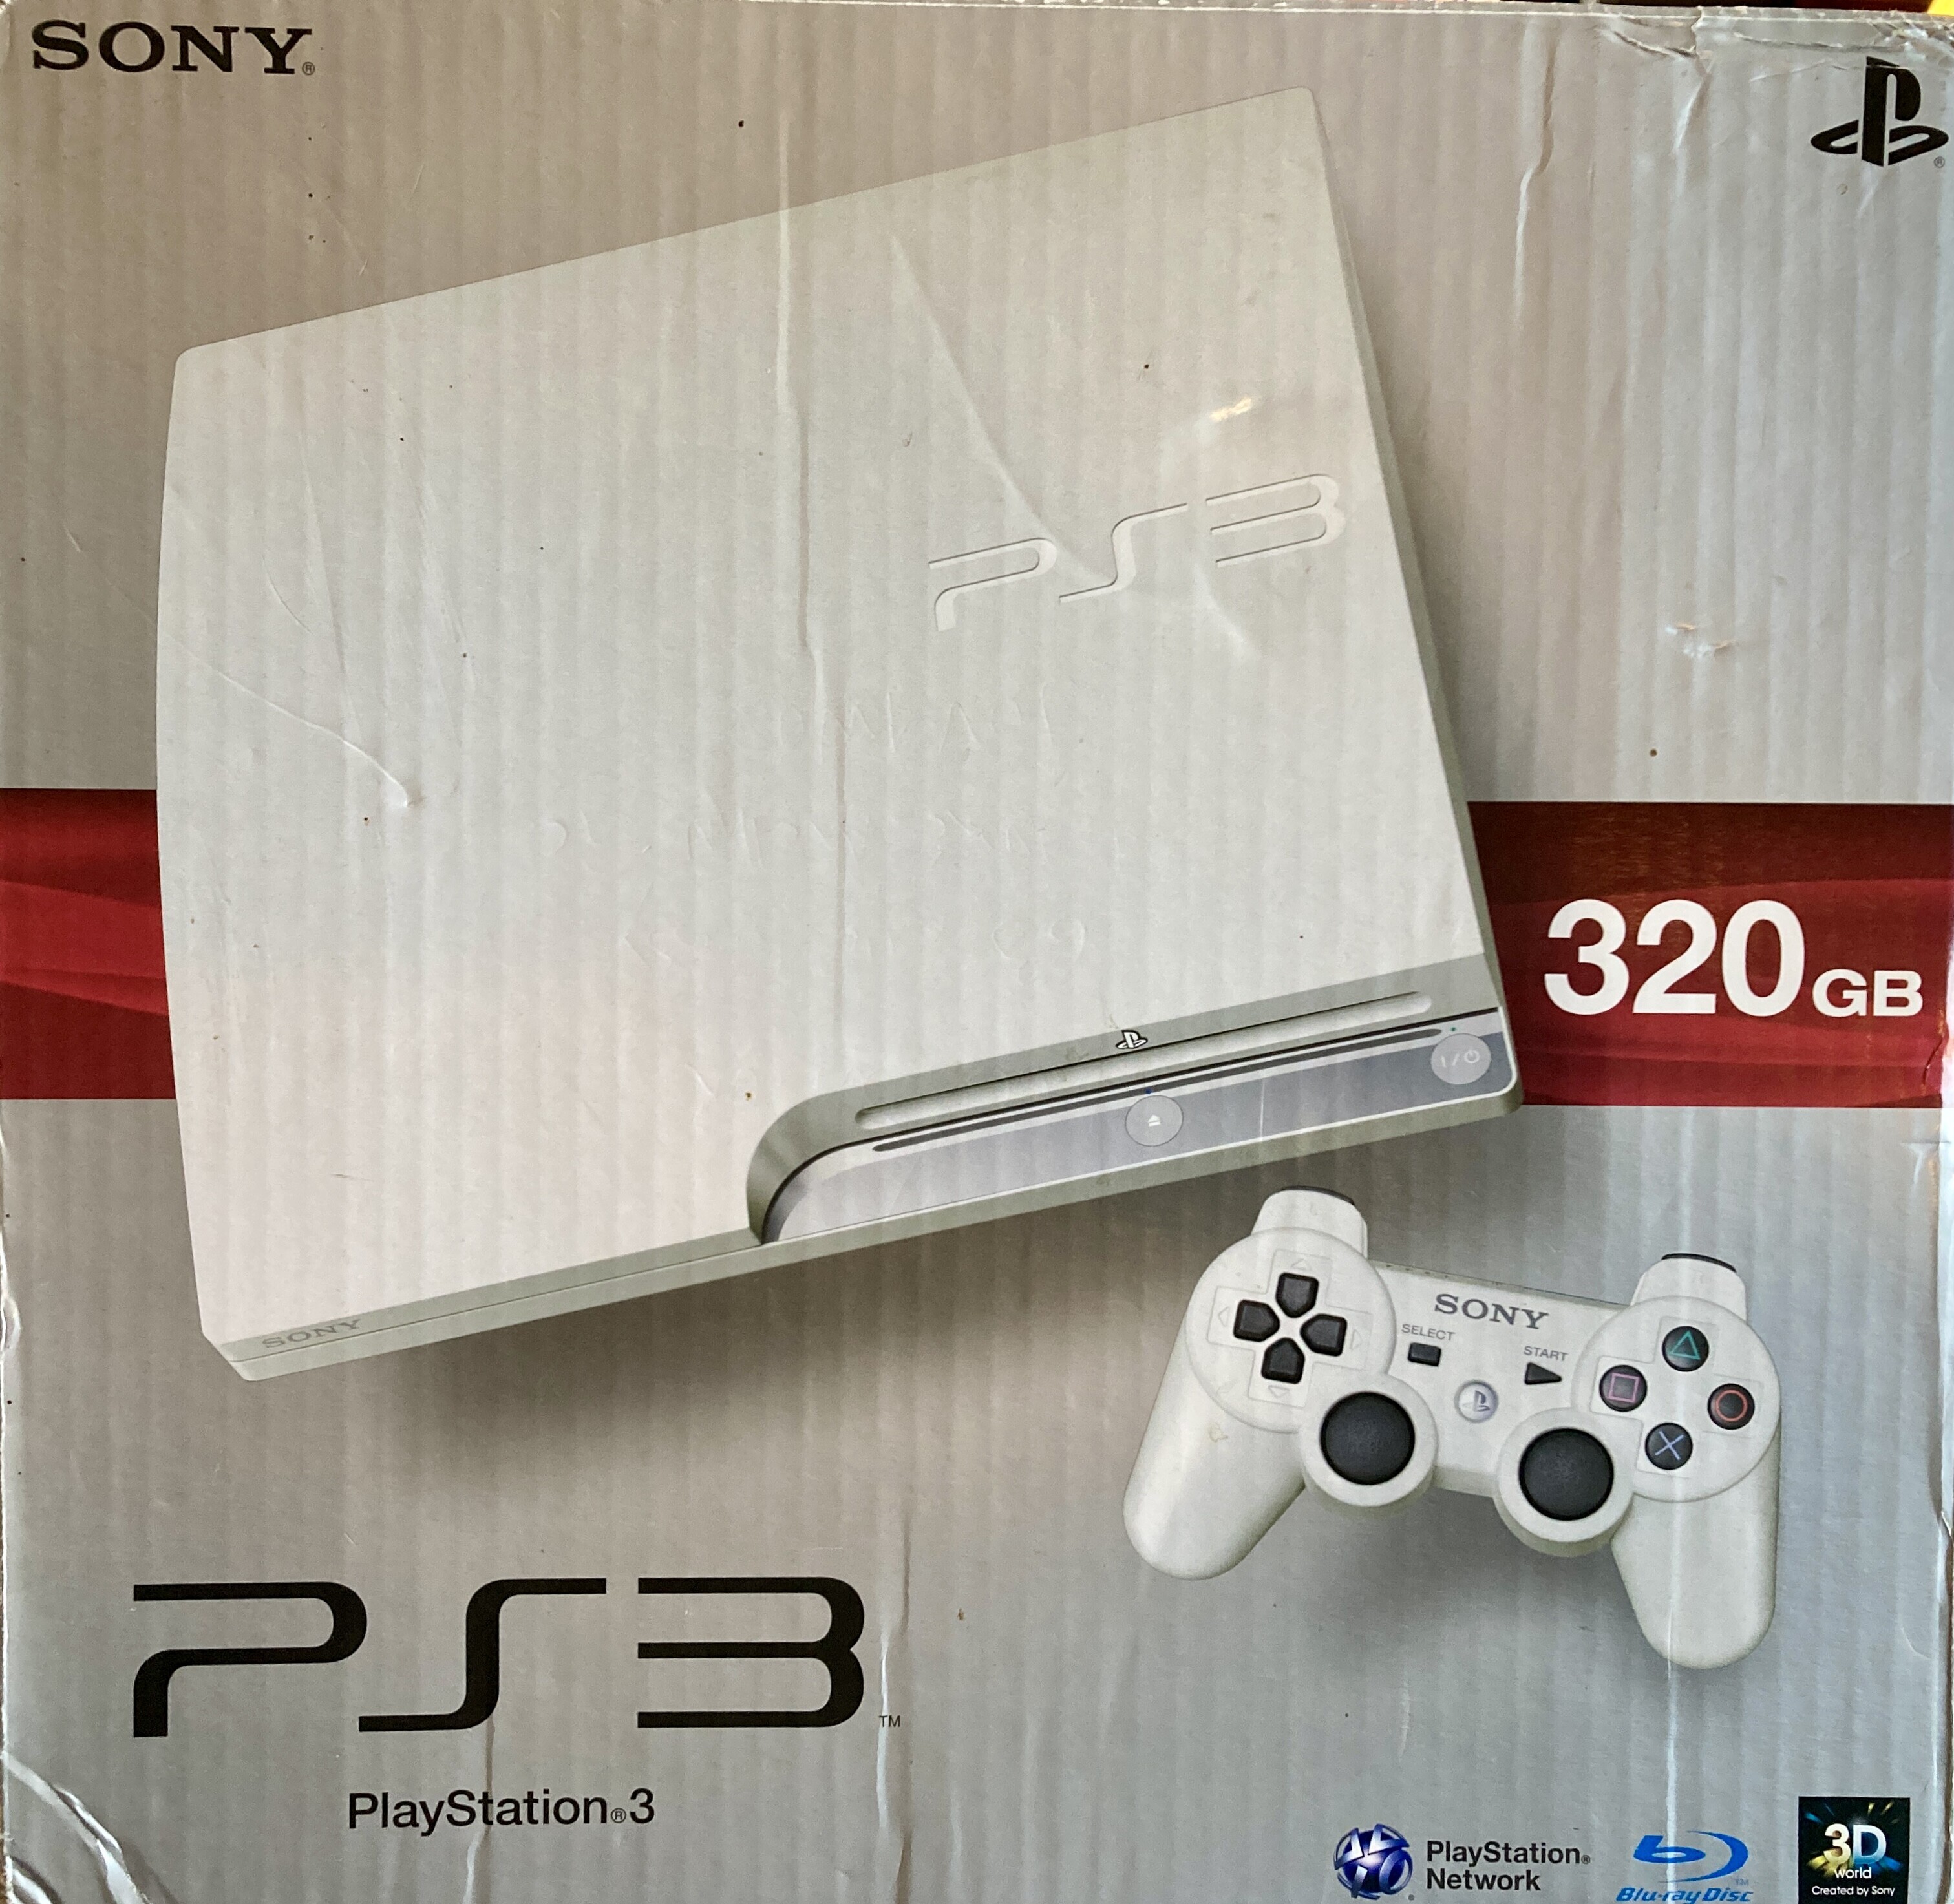  Sony PlayStation 3 Slim 320GB LW Classic White Console